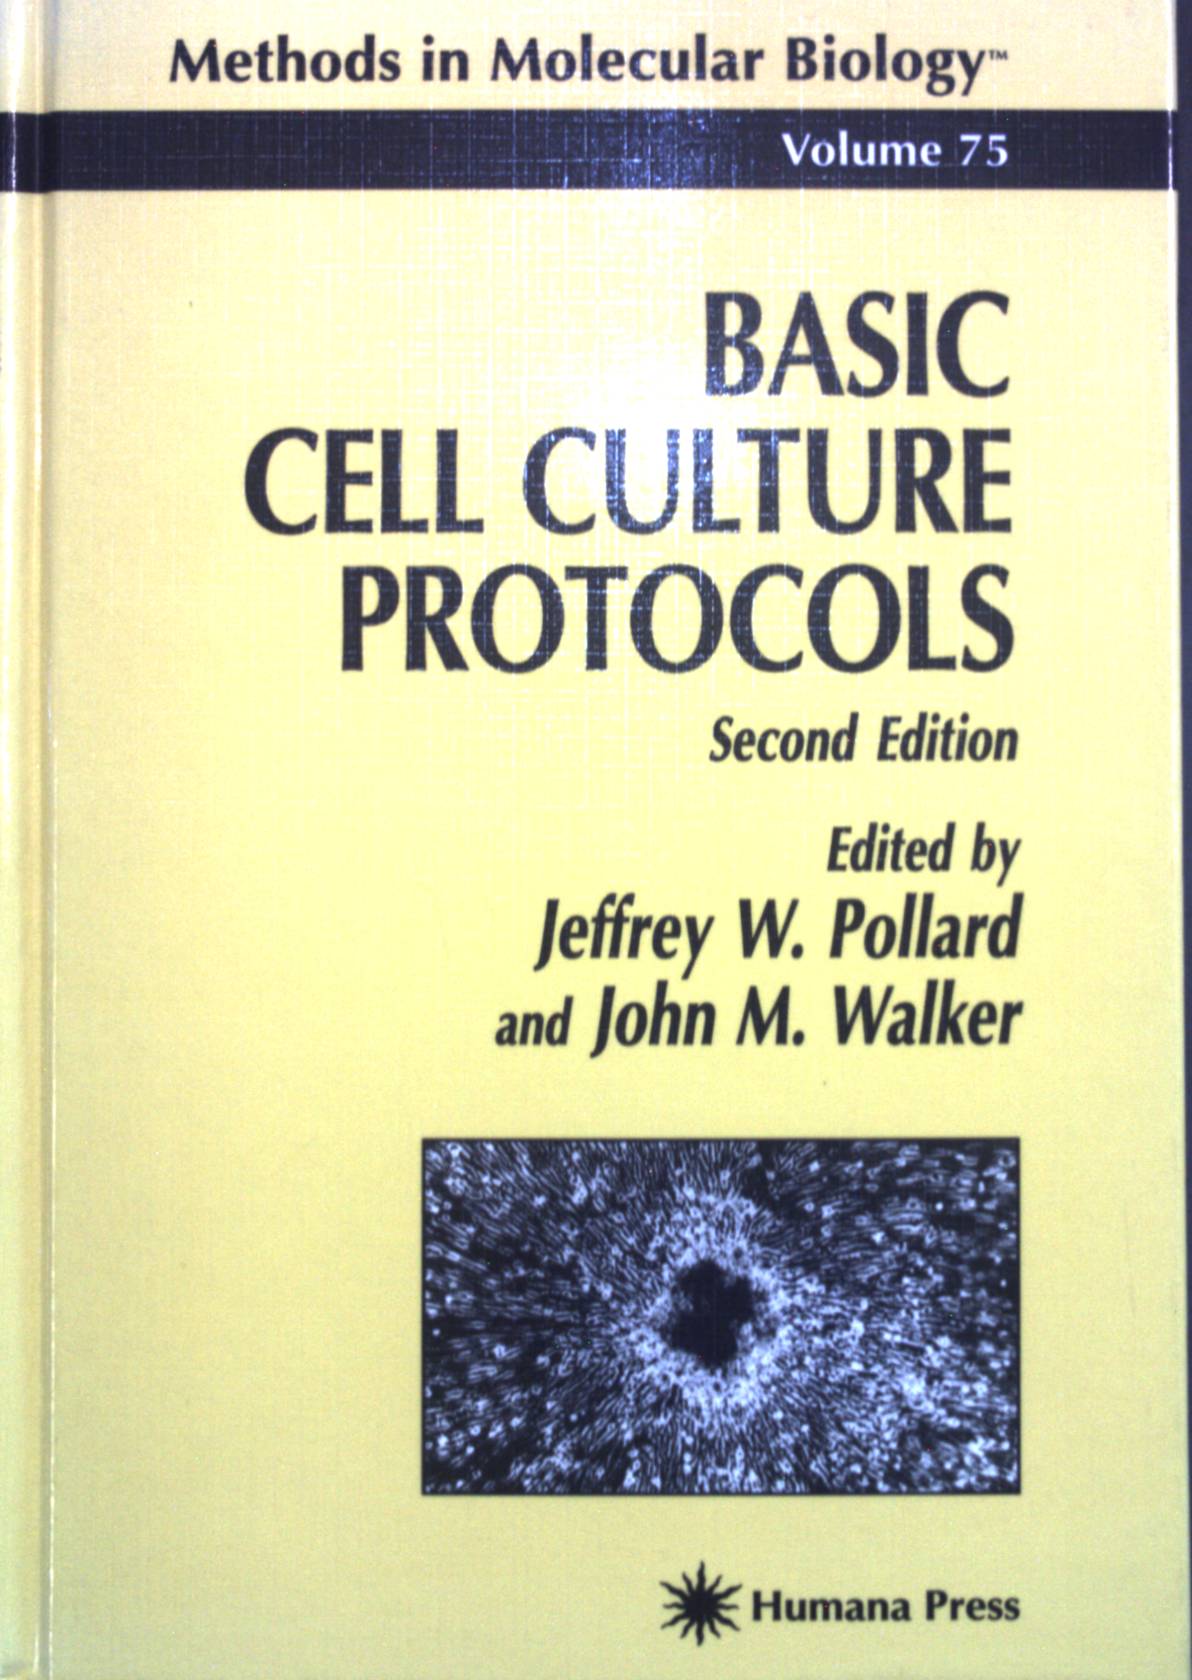 Basic Cell Culture Protocols. Methods in Molecular Biology, Vol. 75 Second Edition - Pollard, Jeffrey W. and John M. Walker